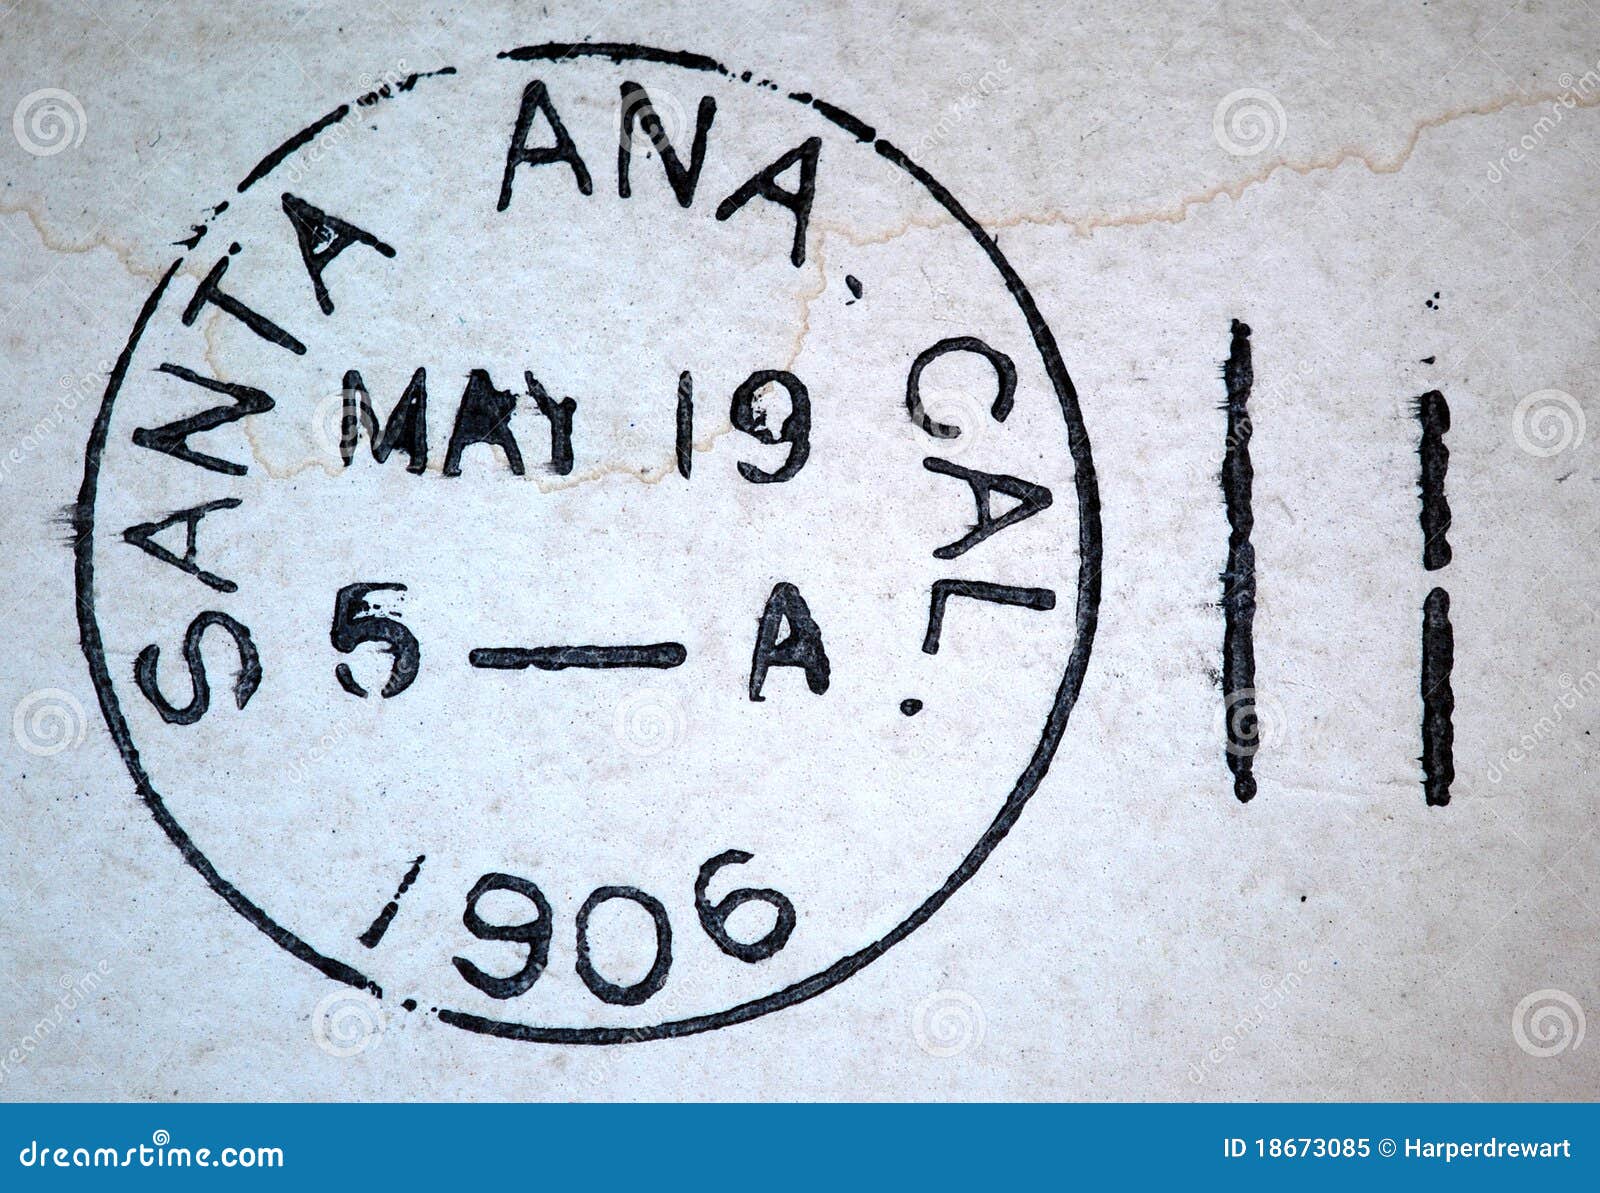 santa ana california 1906 american postmark